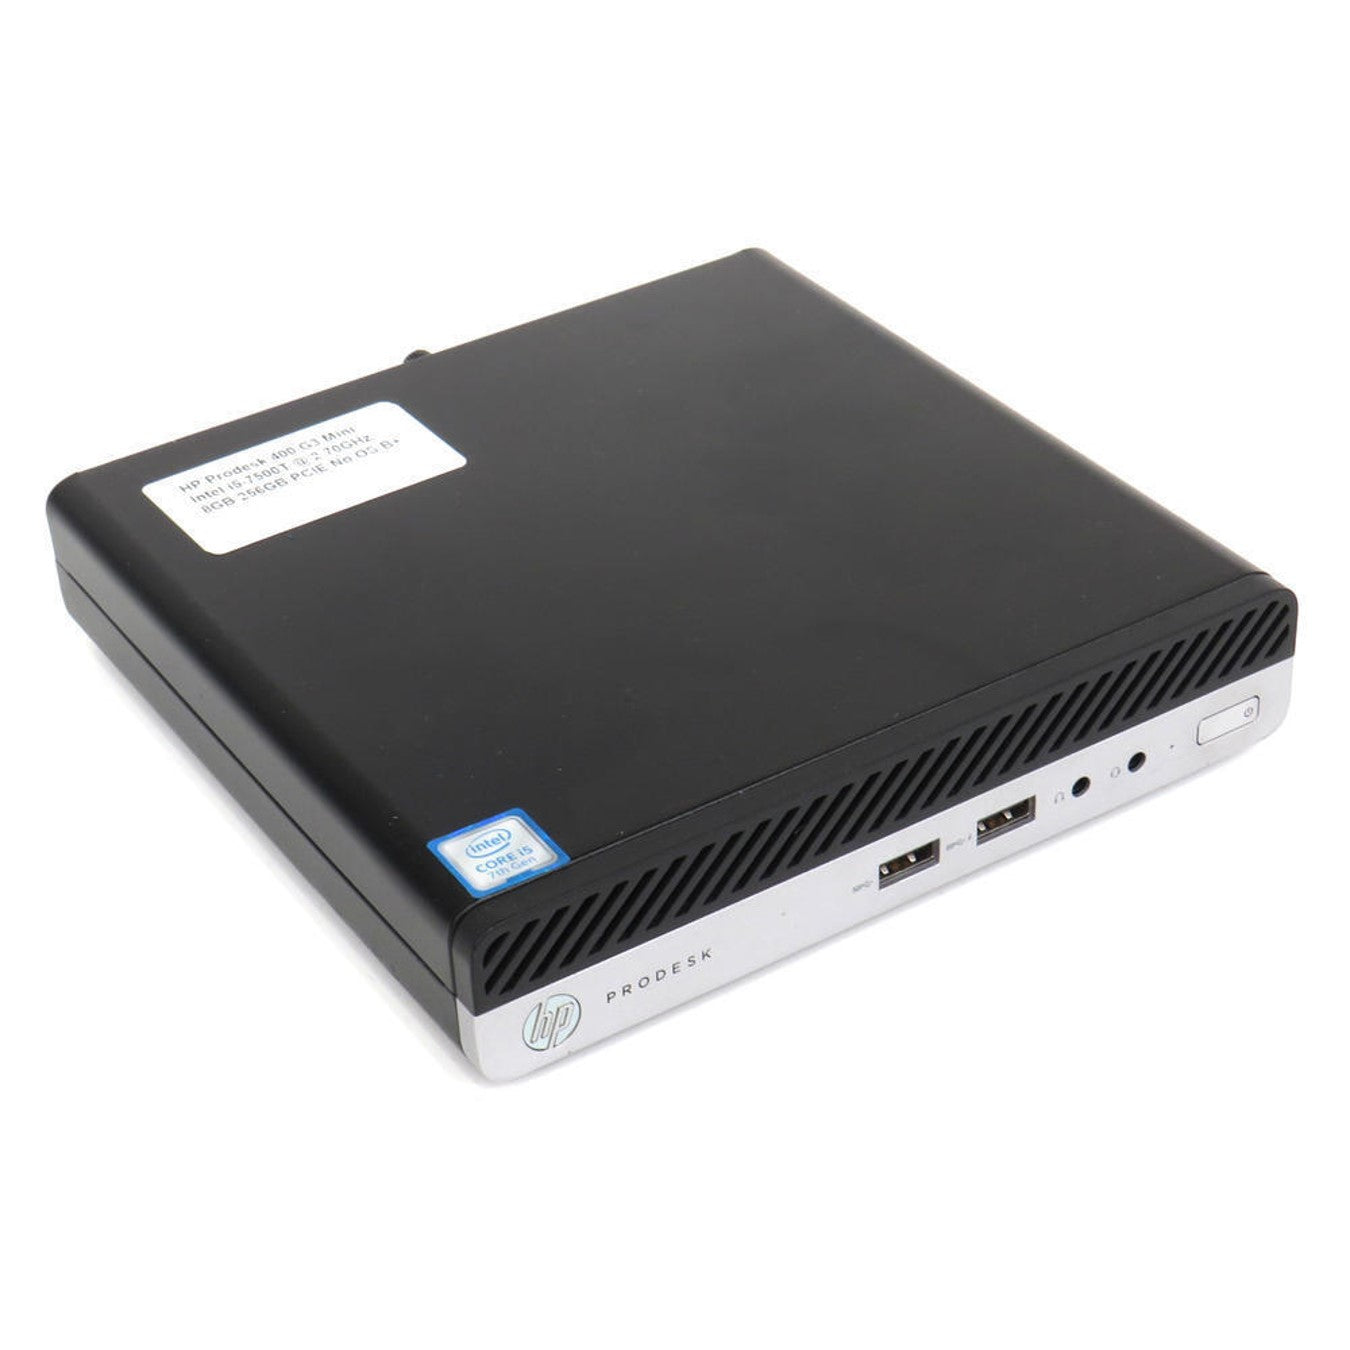 KIT MONITOR + MINI PC HP Prodesk 400 G3 (i5-6ta 8GB 500GB) Reacondicionado Grado A